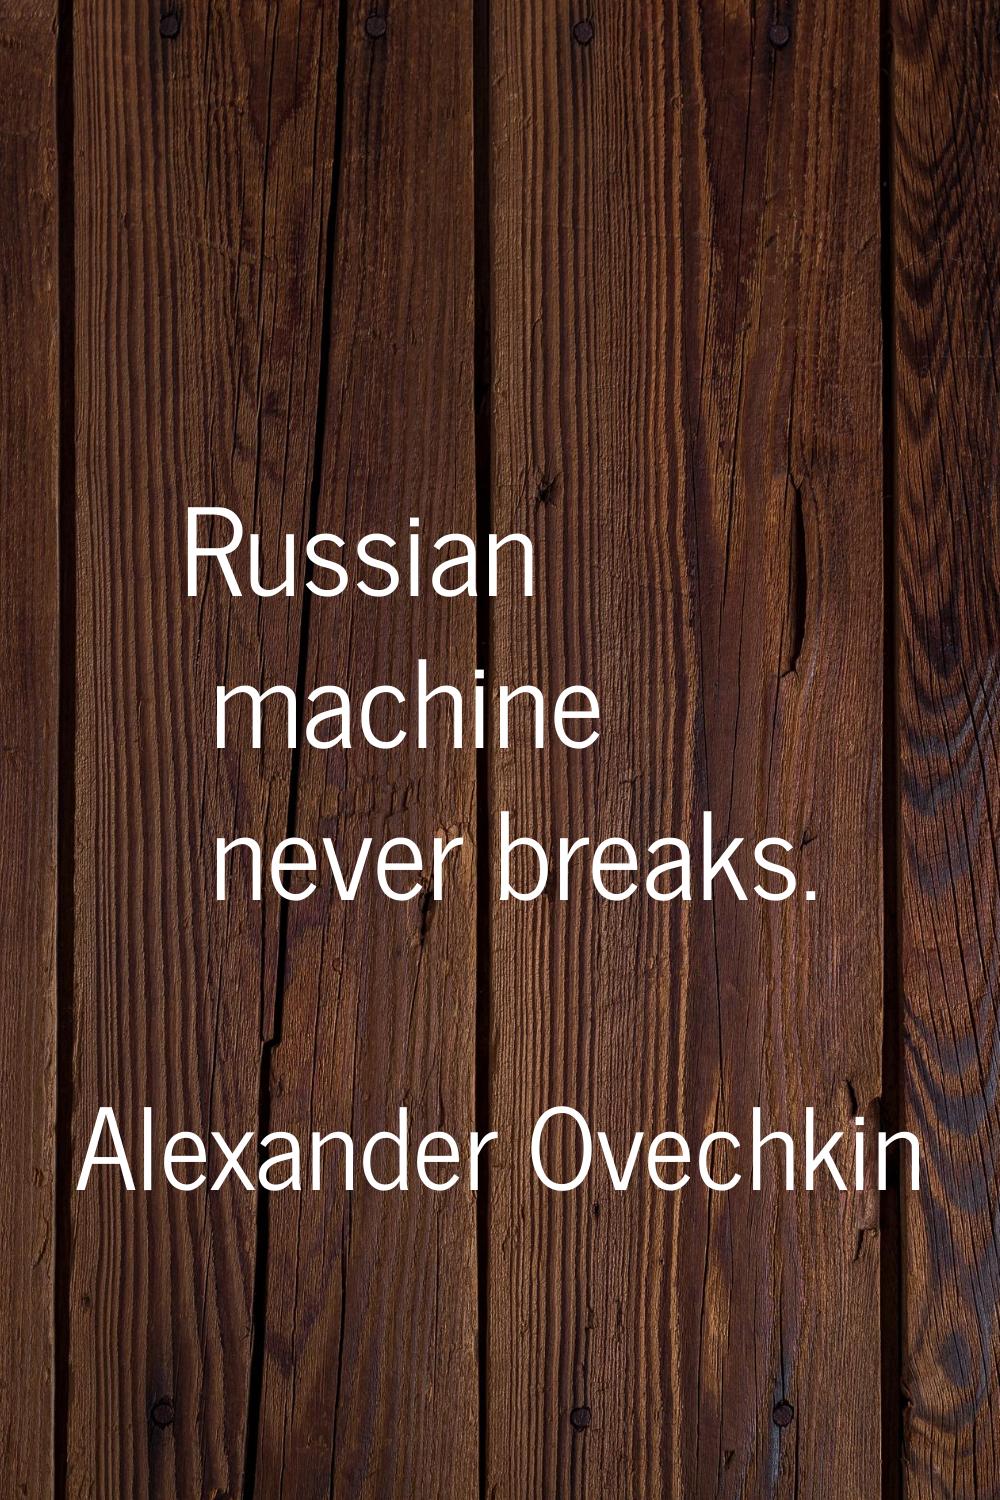 Russian machine never breaks.